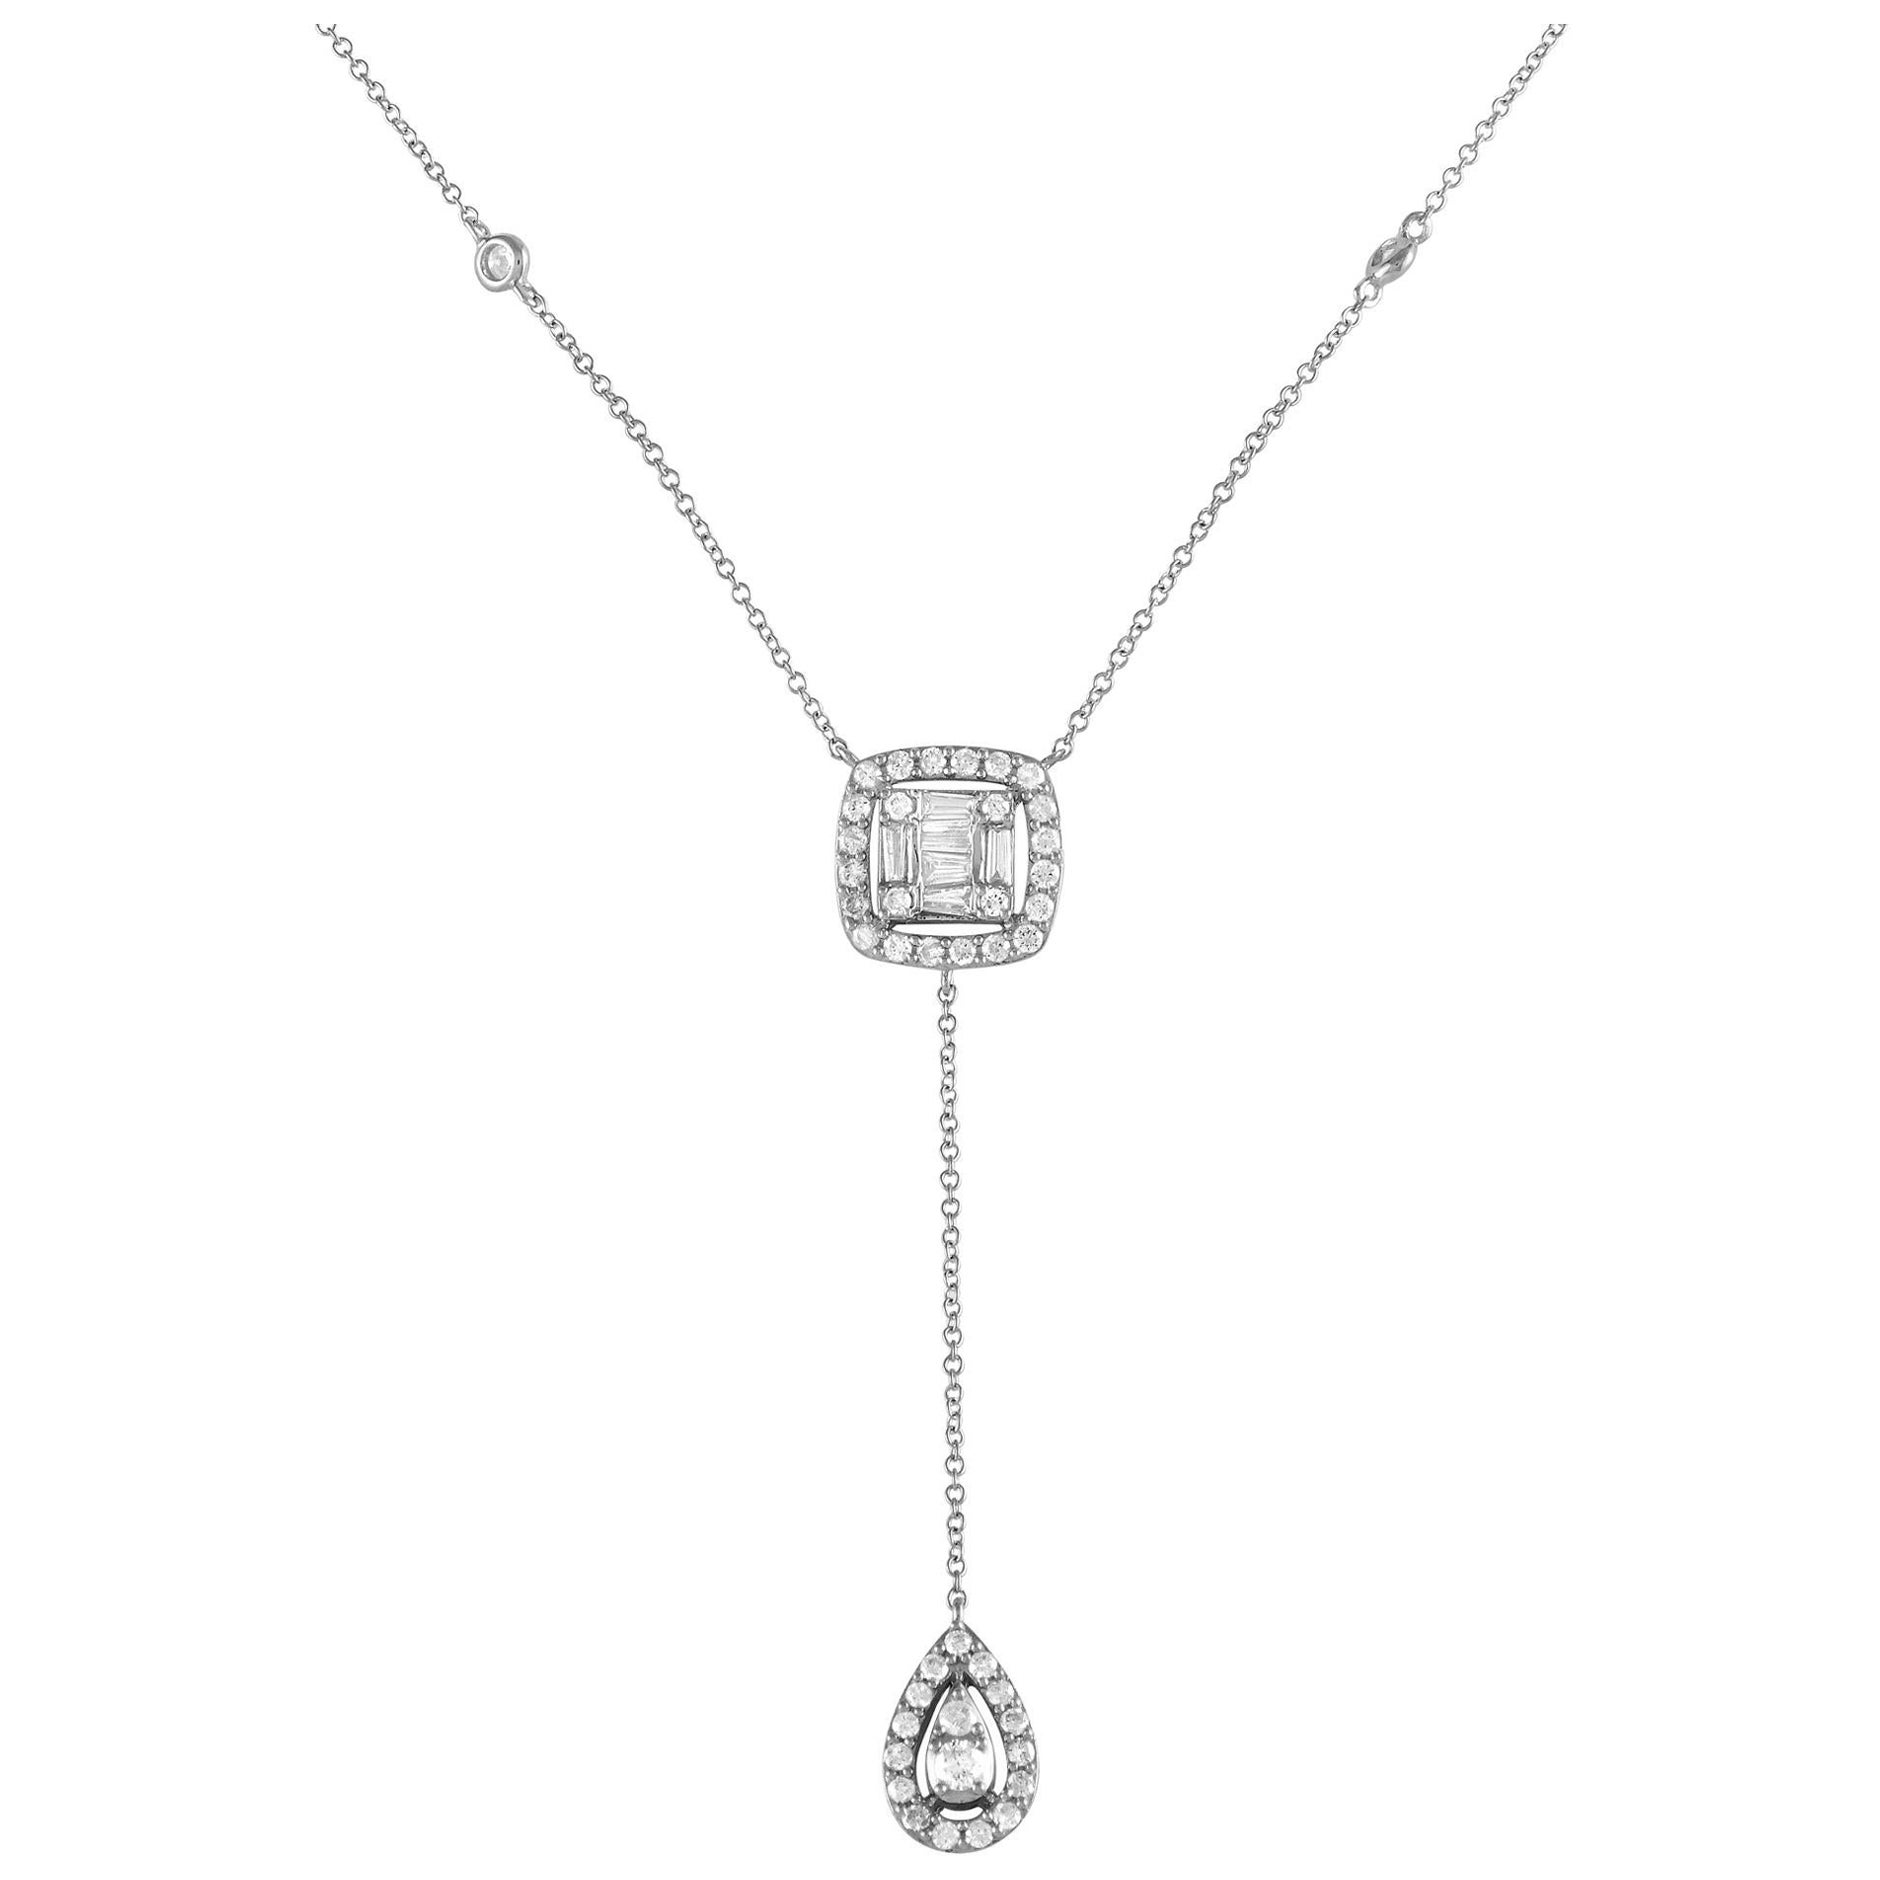 LB Exclusive 14K White Gold 0.65ct Diamond Necklace NK013181